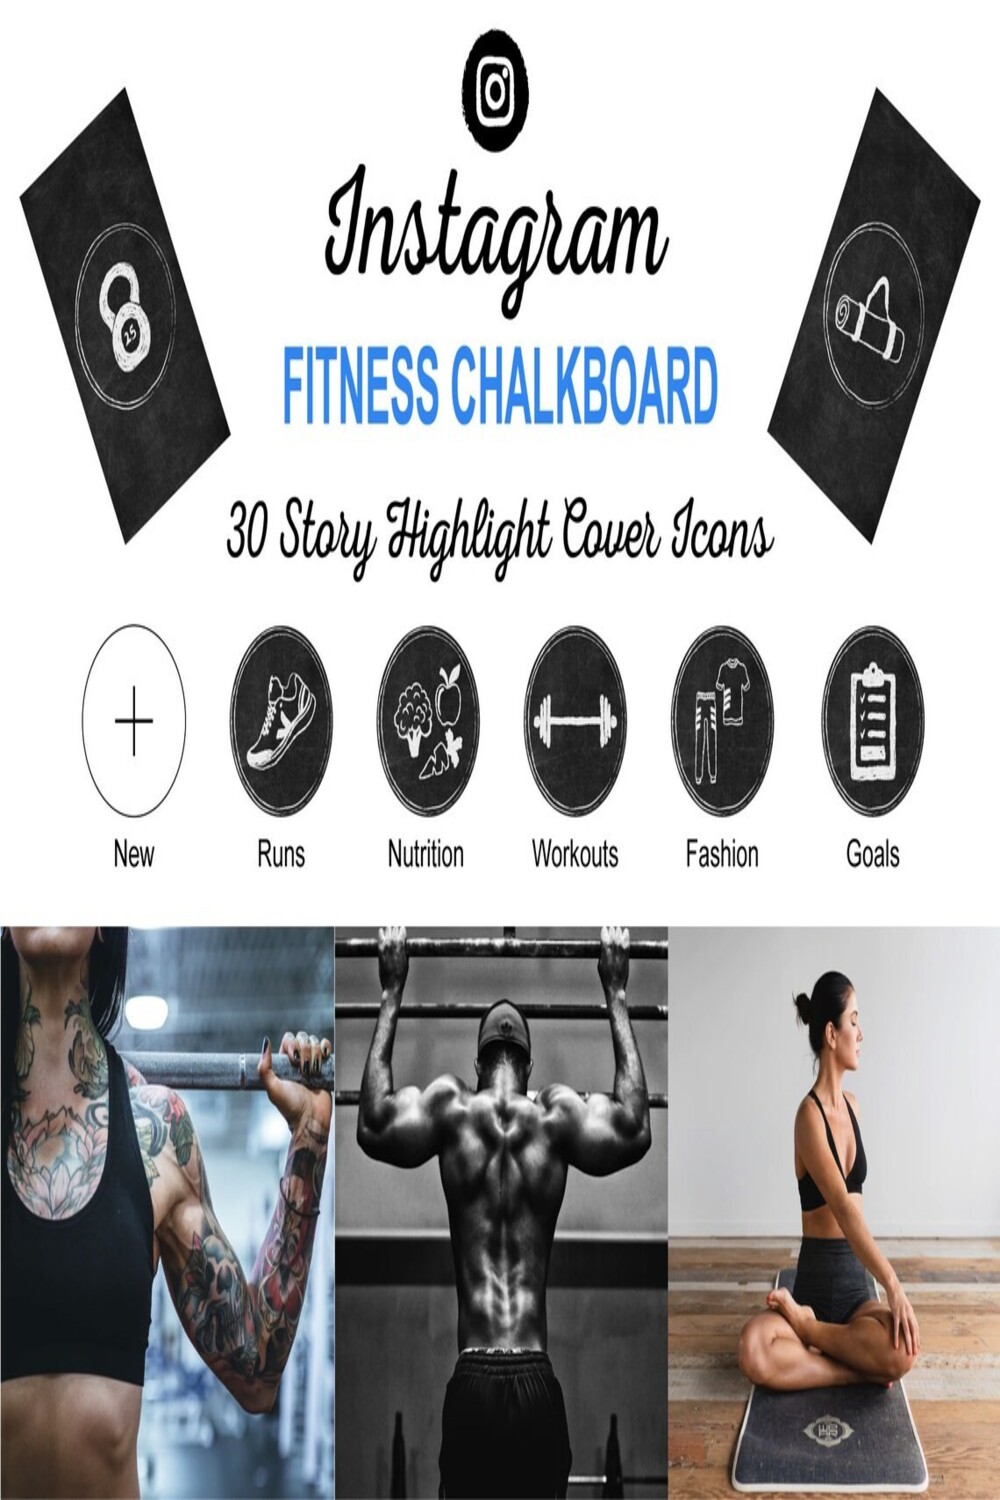 Instagram Fitness ChalkBoard (30 Story Highlight Cover Icons) pinterest image.